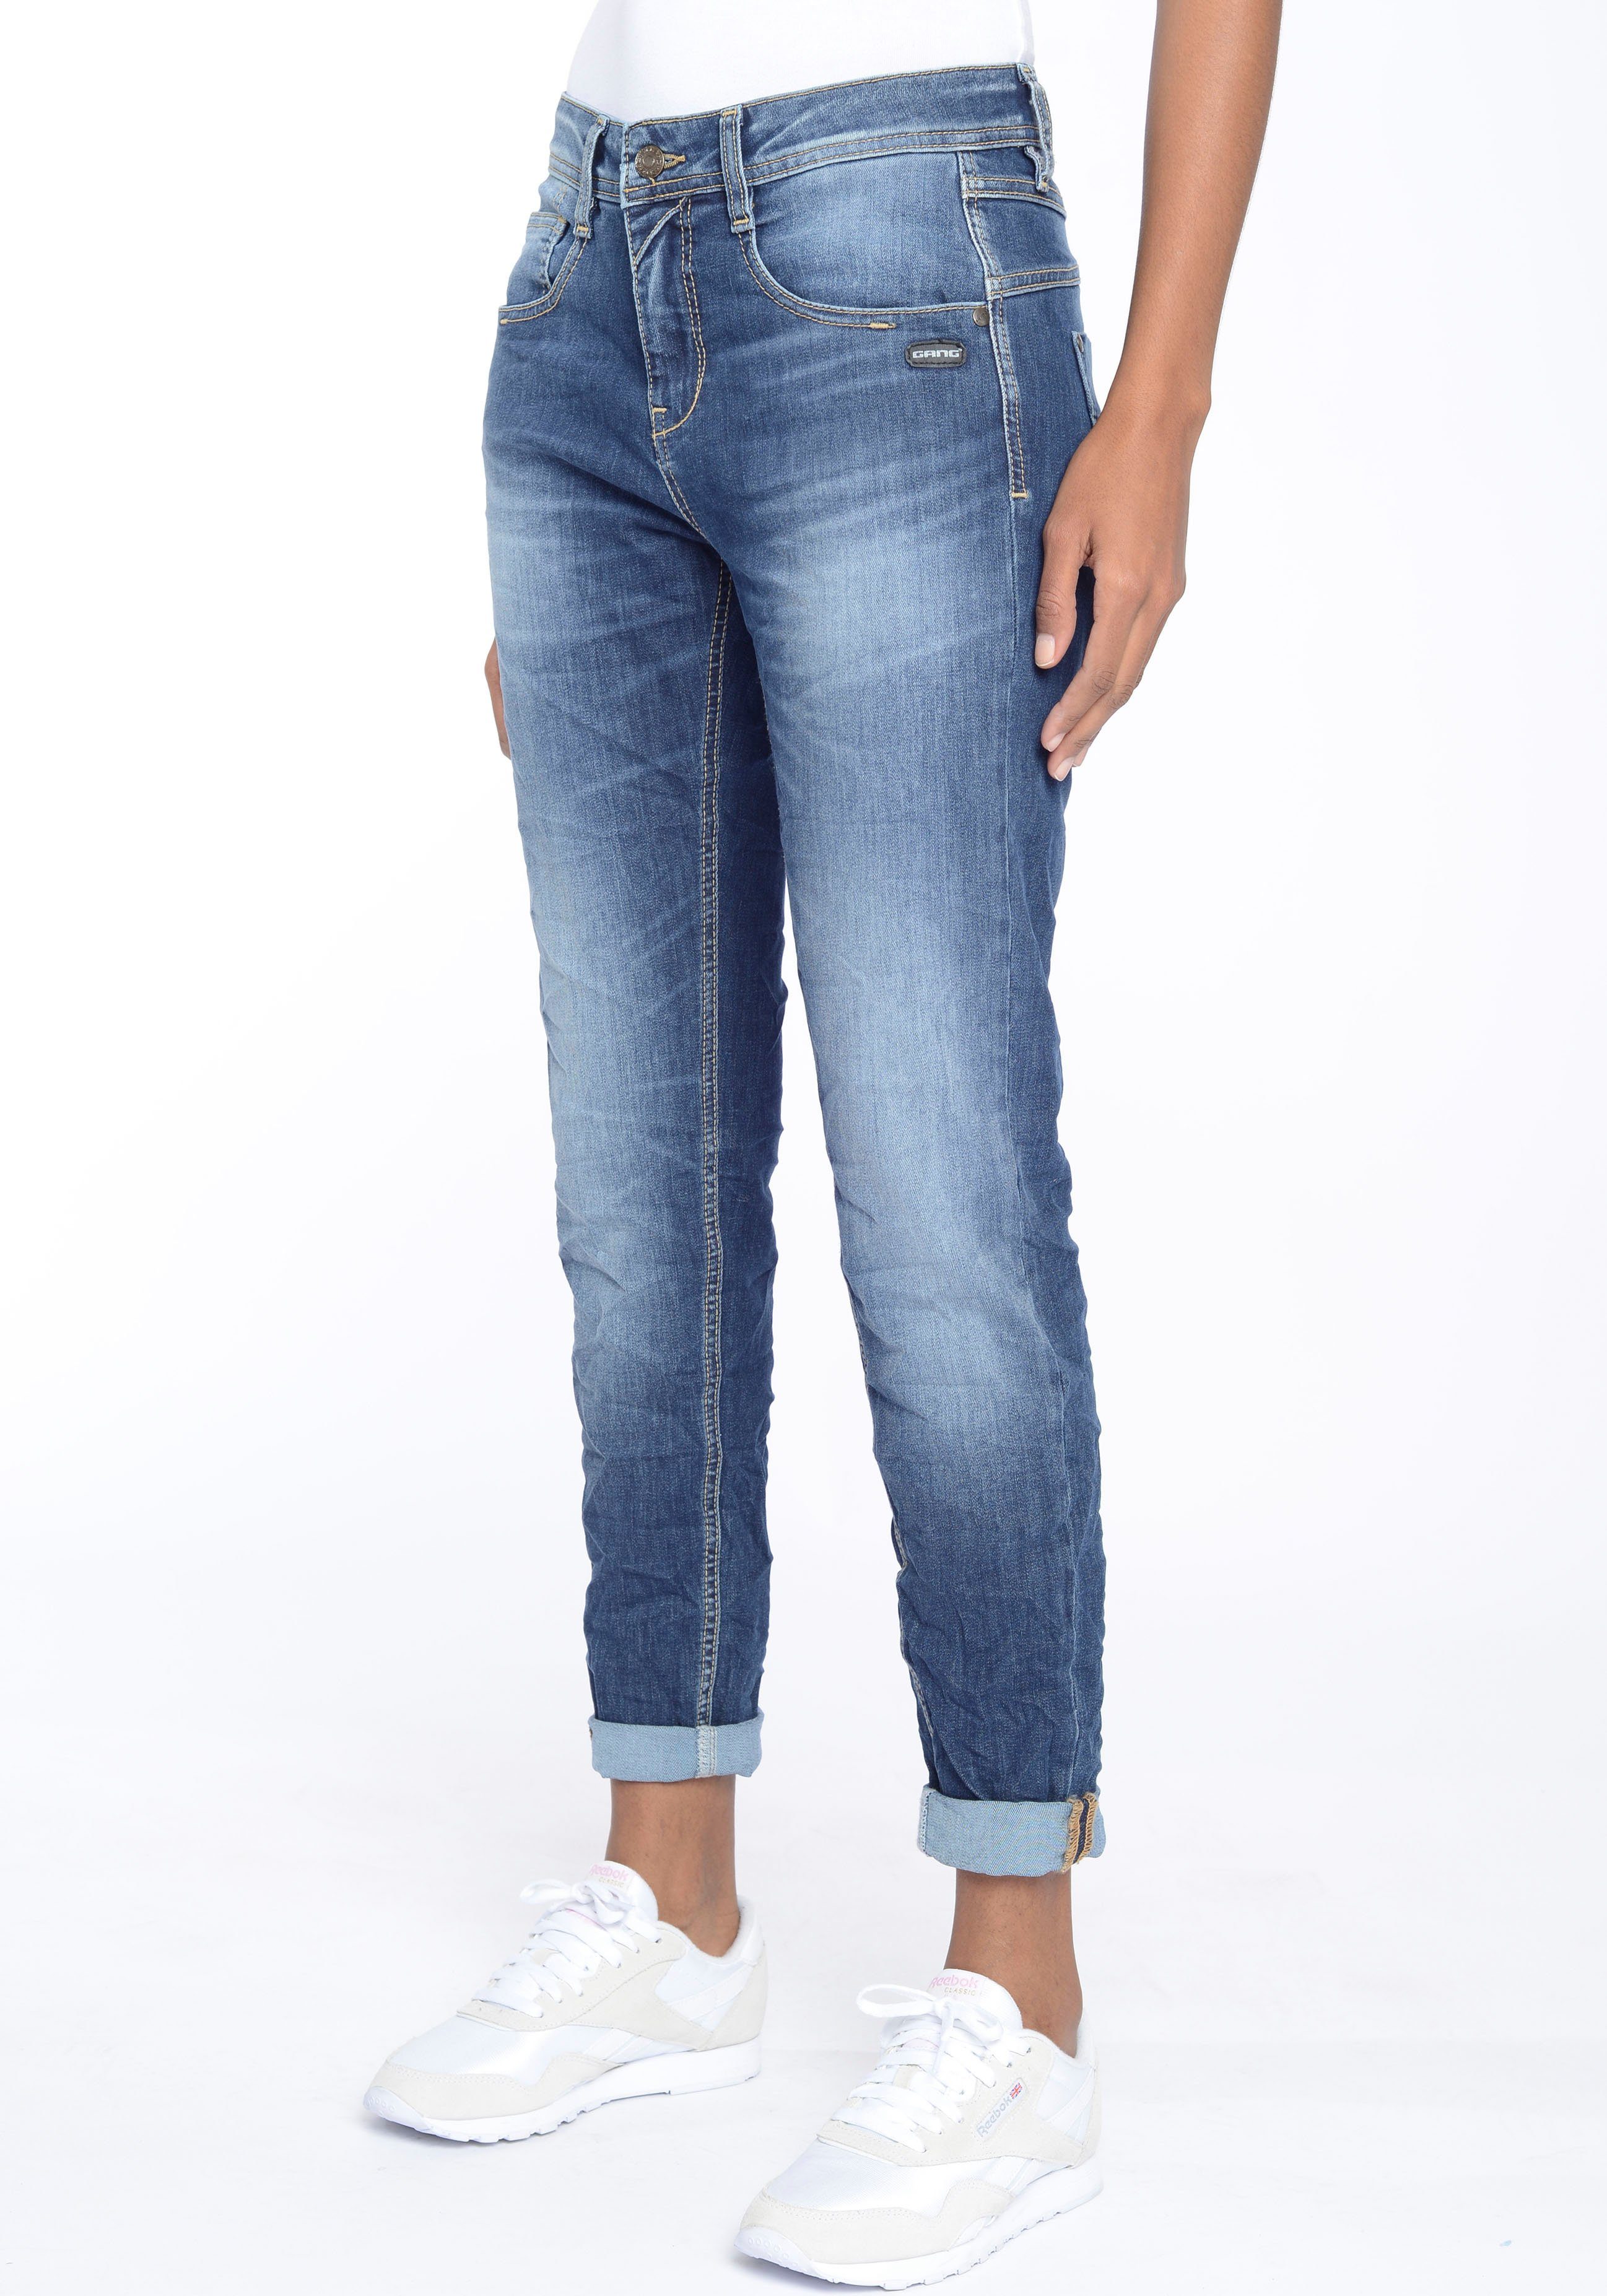 perfekter Relax-fit-Jeans denim Elasthan-Anteil GANG (mid blue) authentic 94AMELIE durch Sitz rock